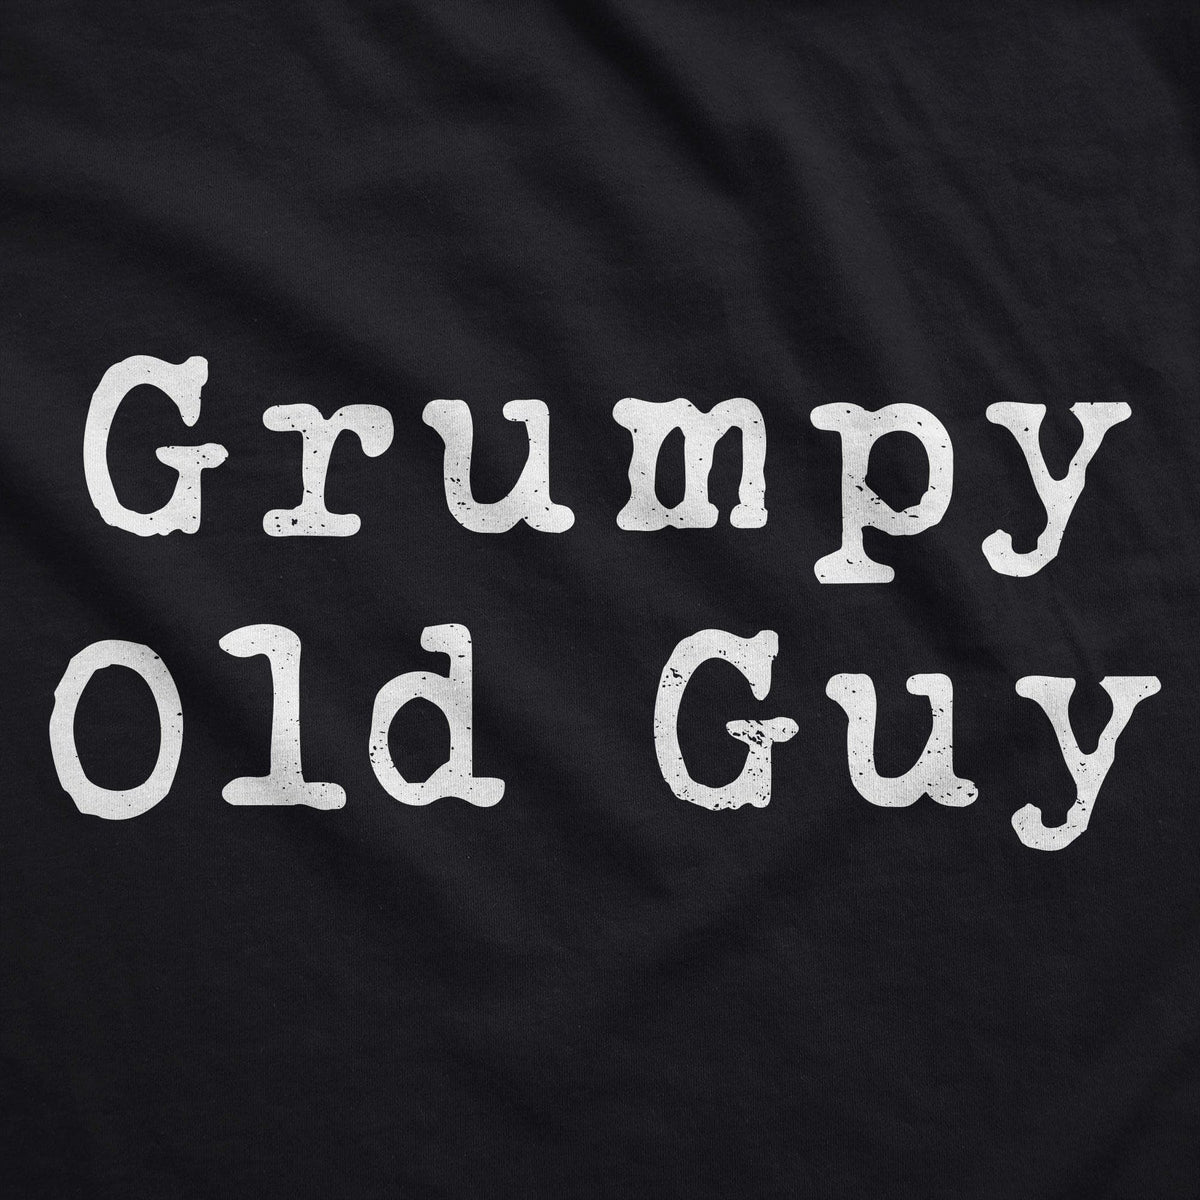 Grumpy Old Guy Face Mask Mask - Crazy Dog T-Shirts